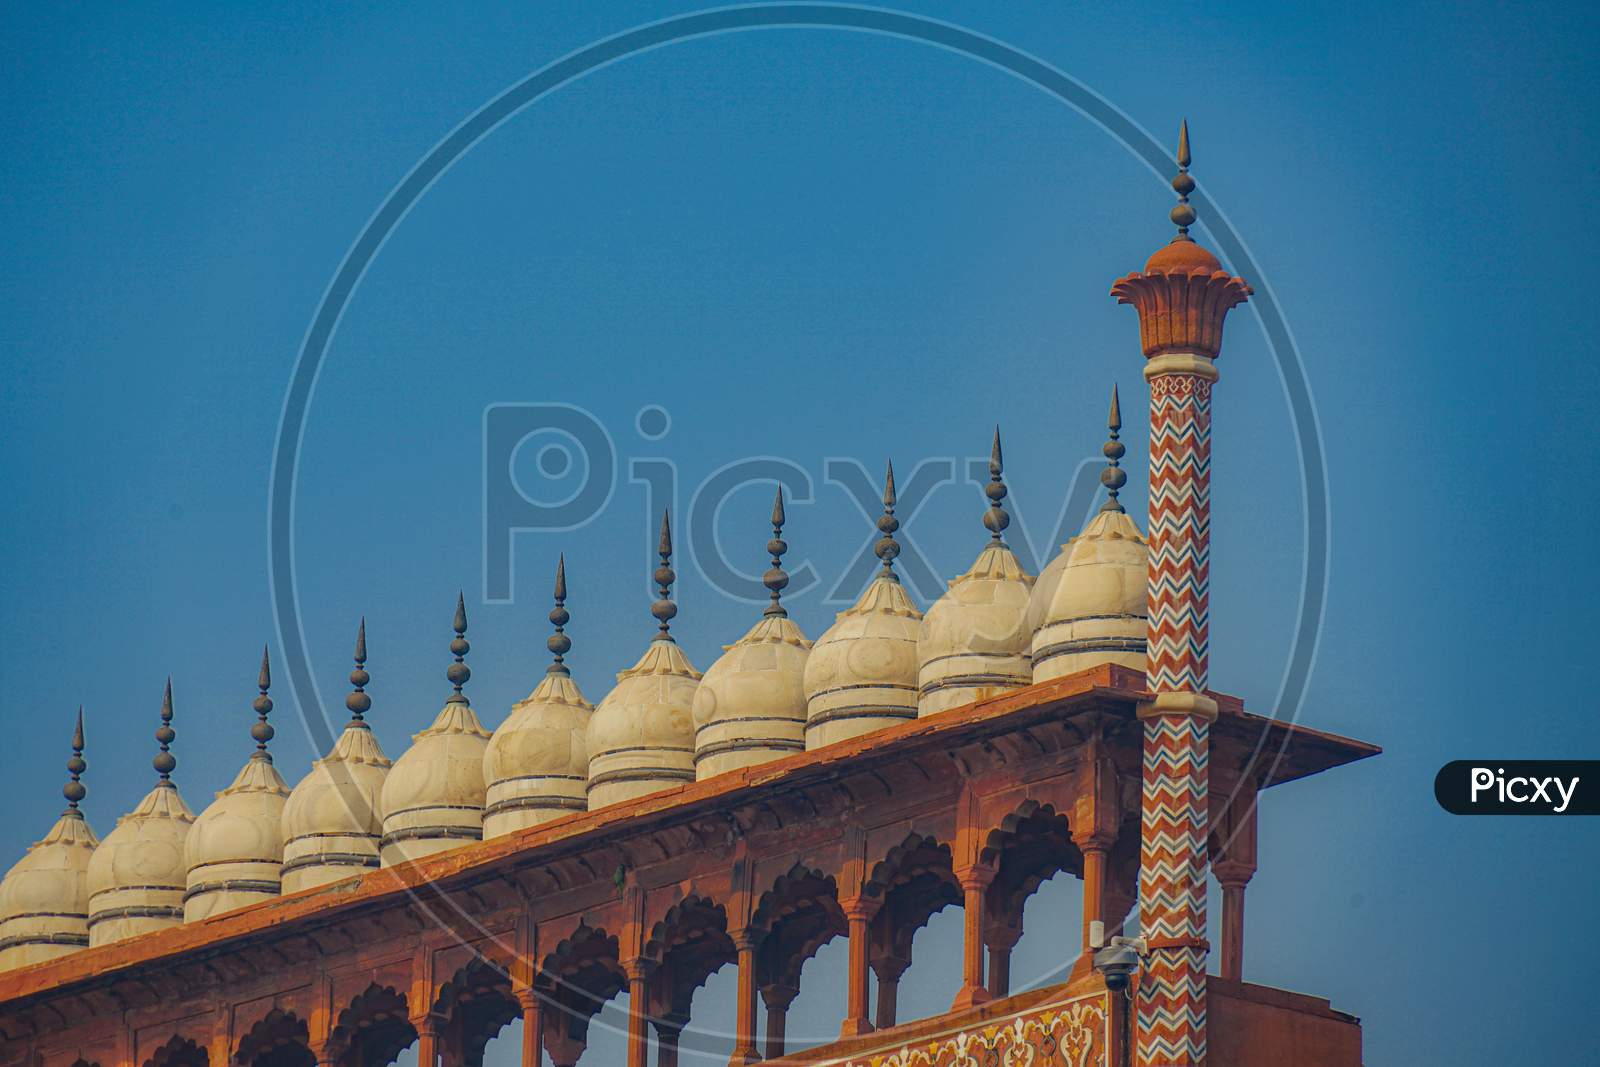 The Taj Mahal Of The Large Tower Gate (India, Agra)